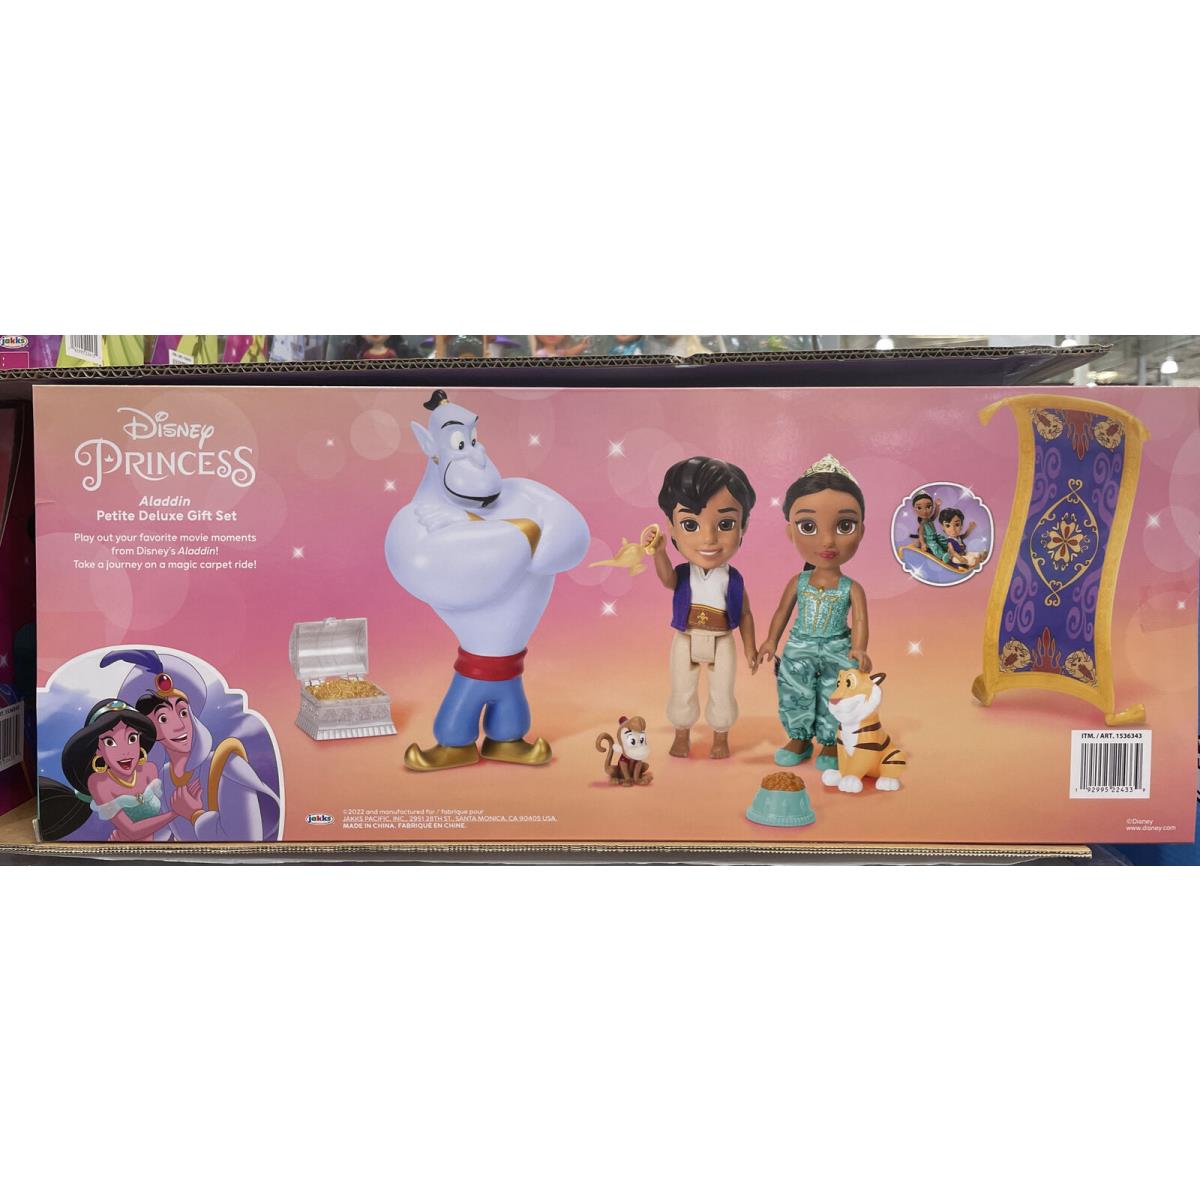 Disney Princess Petite Aladdin Deluxe Gift Set